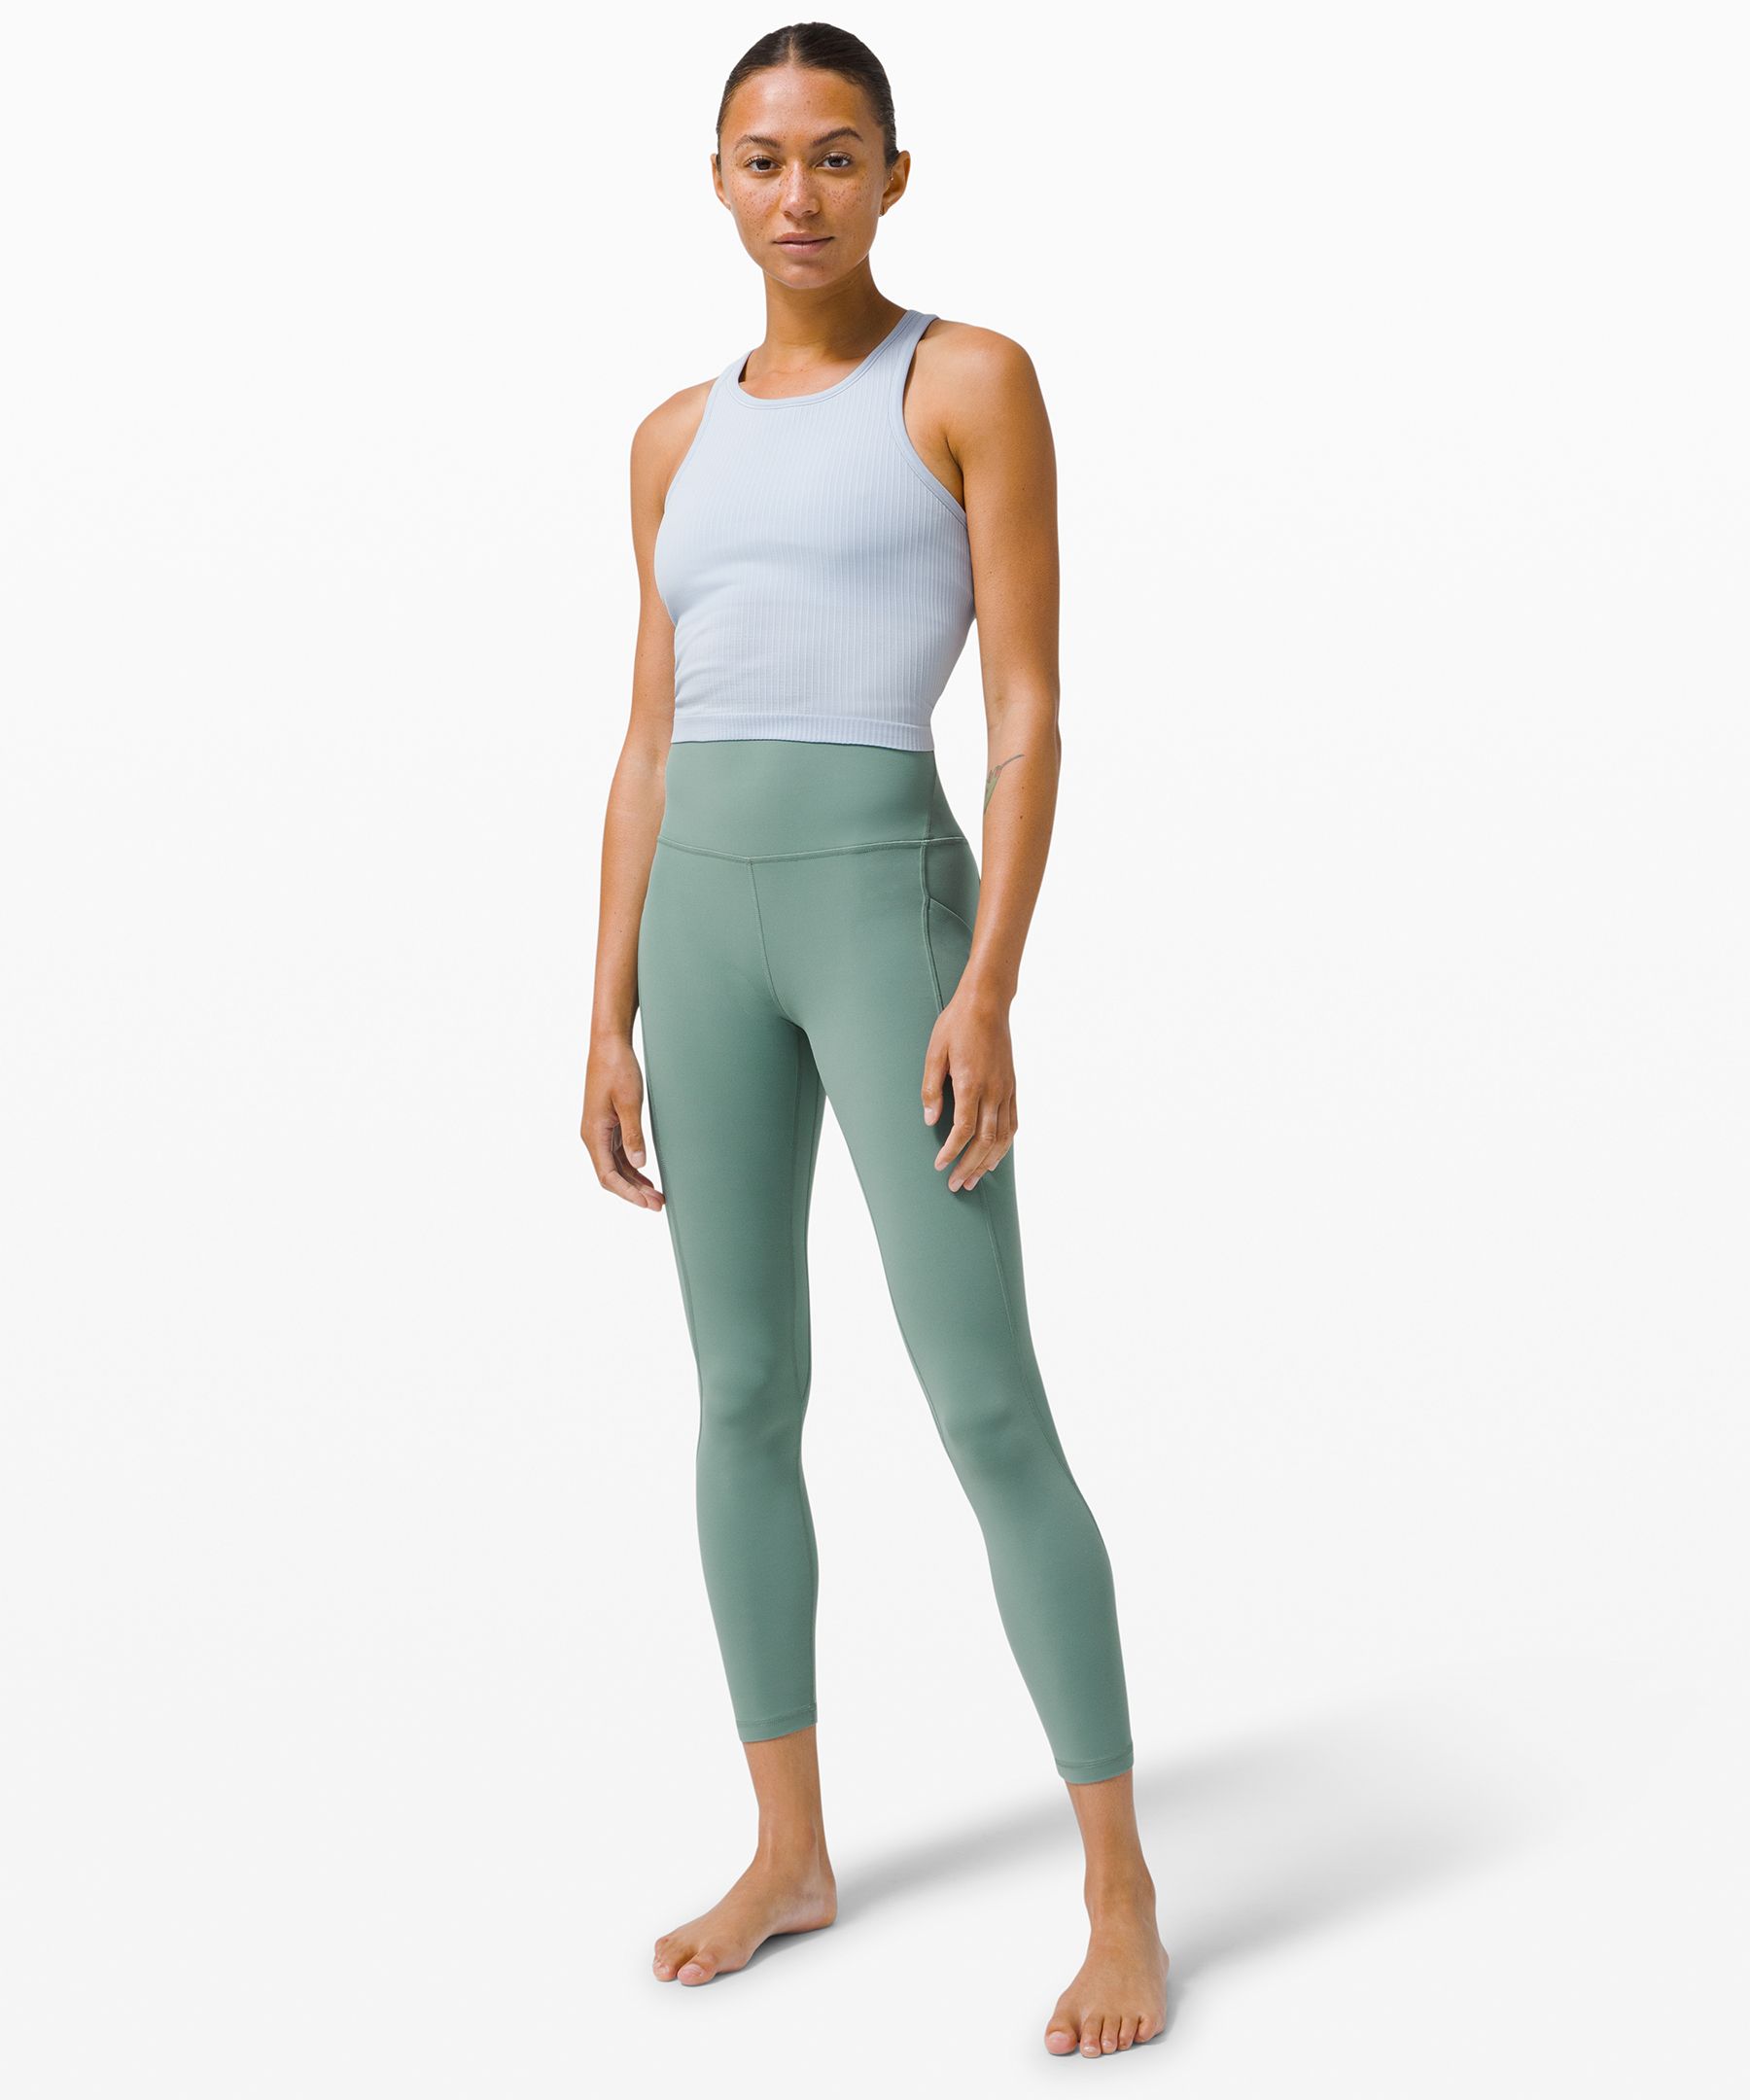 Decathlon Yoga Pants Clearance Selling, Save 55% | jlcatj.gob.mx